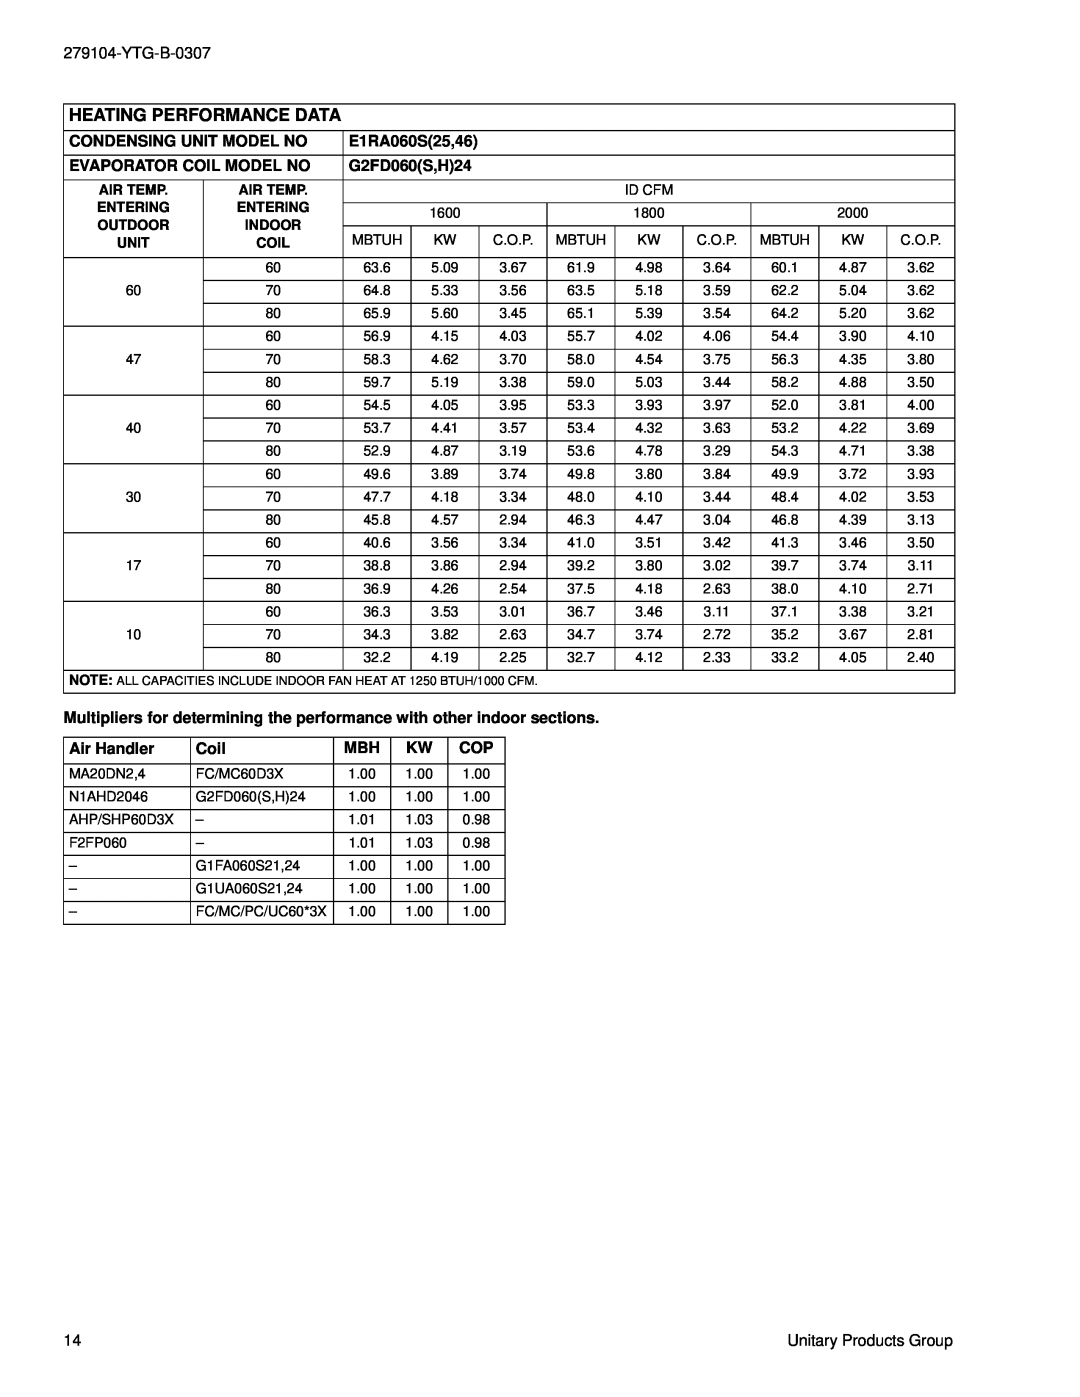 York 060, 090, 036-048 warranty Heating Performance Data, Id Cfm 